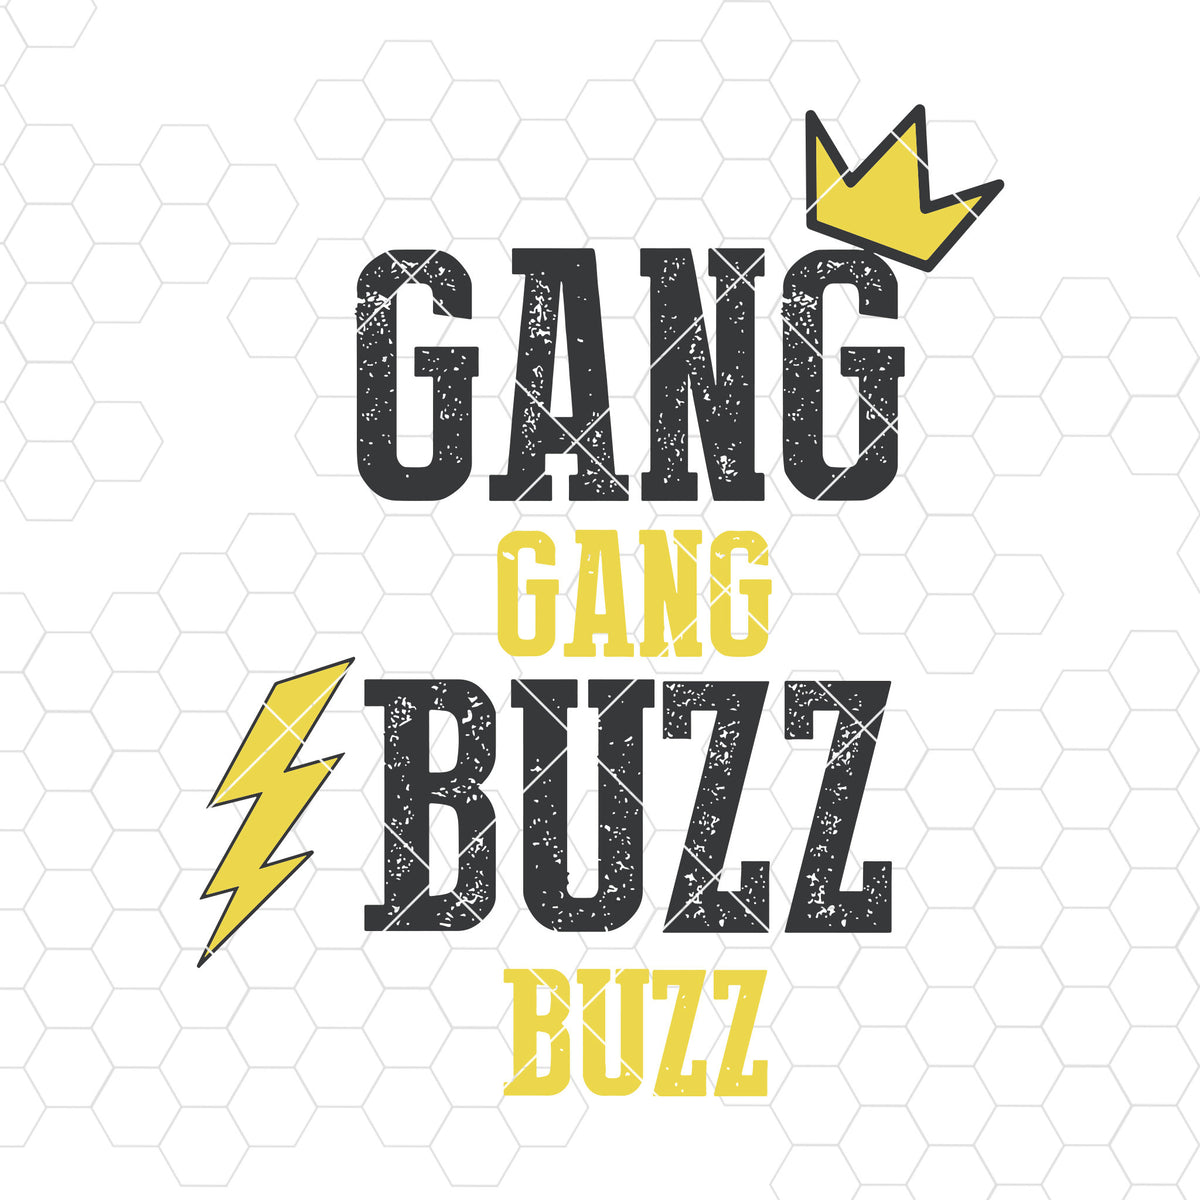 Download Gang Gang Buzz Buzz Digital Cut Files Svg, Dxf, Eps, Png ...